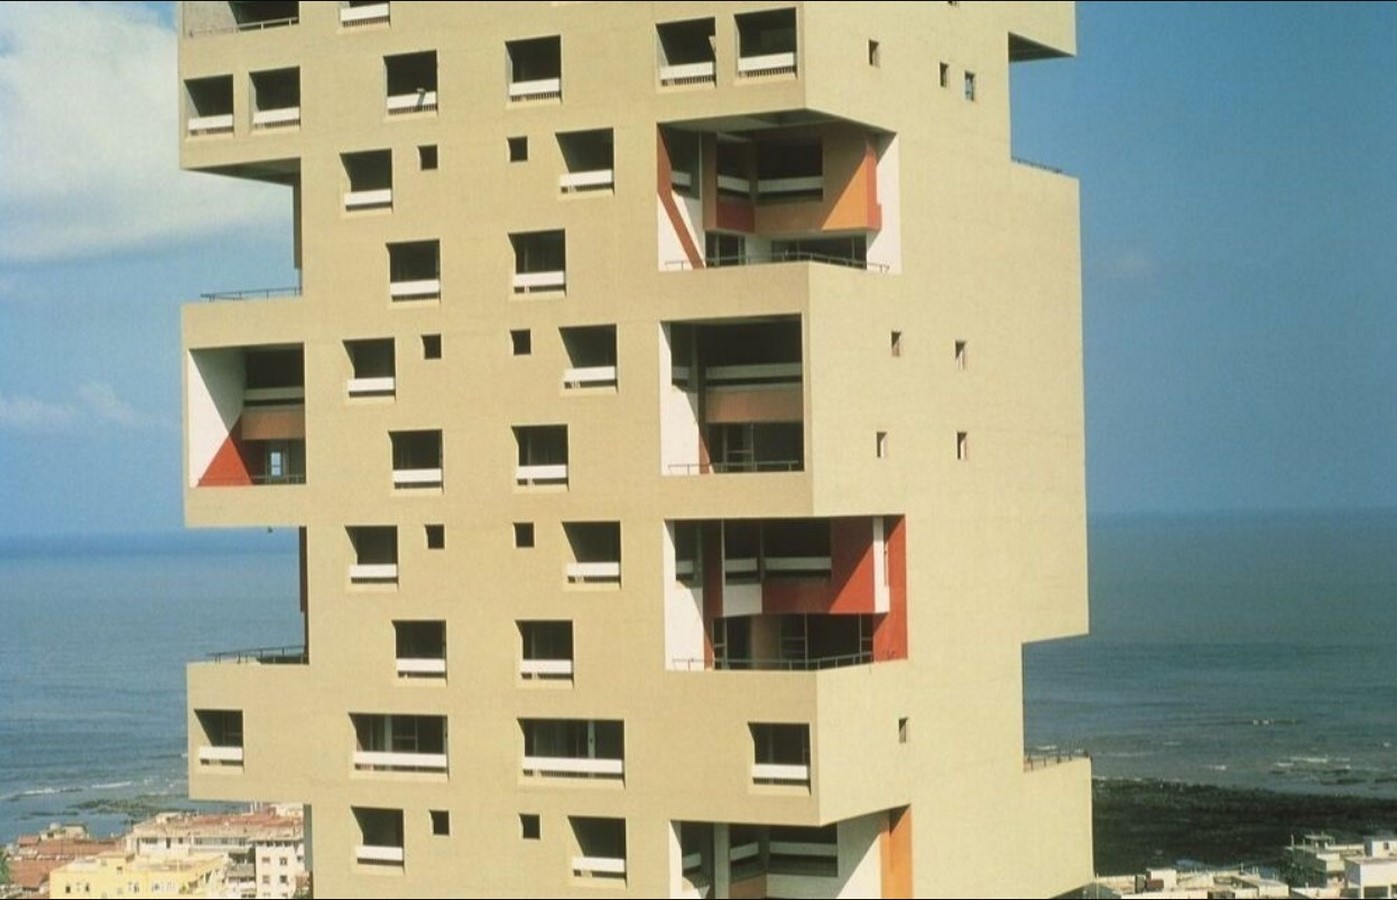 Kanchanjunga Apartments by Charles Correa: The Vertical Bungalows - Sheet1